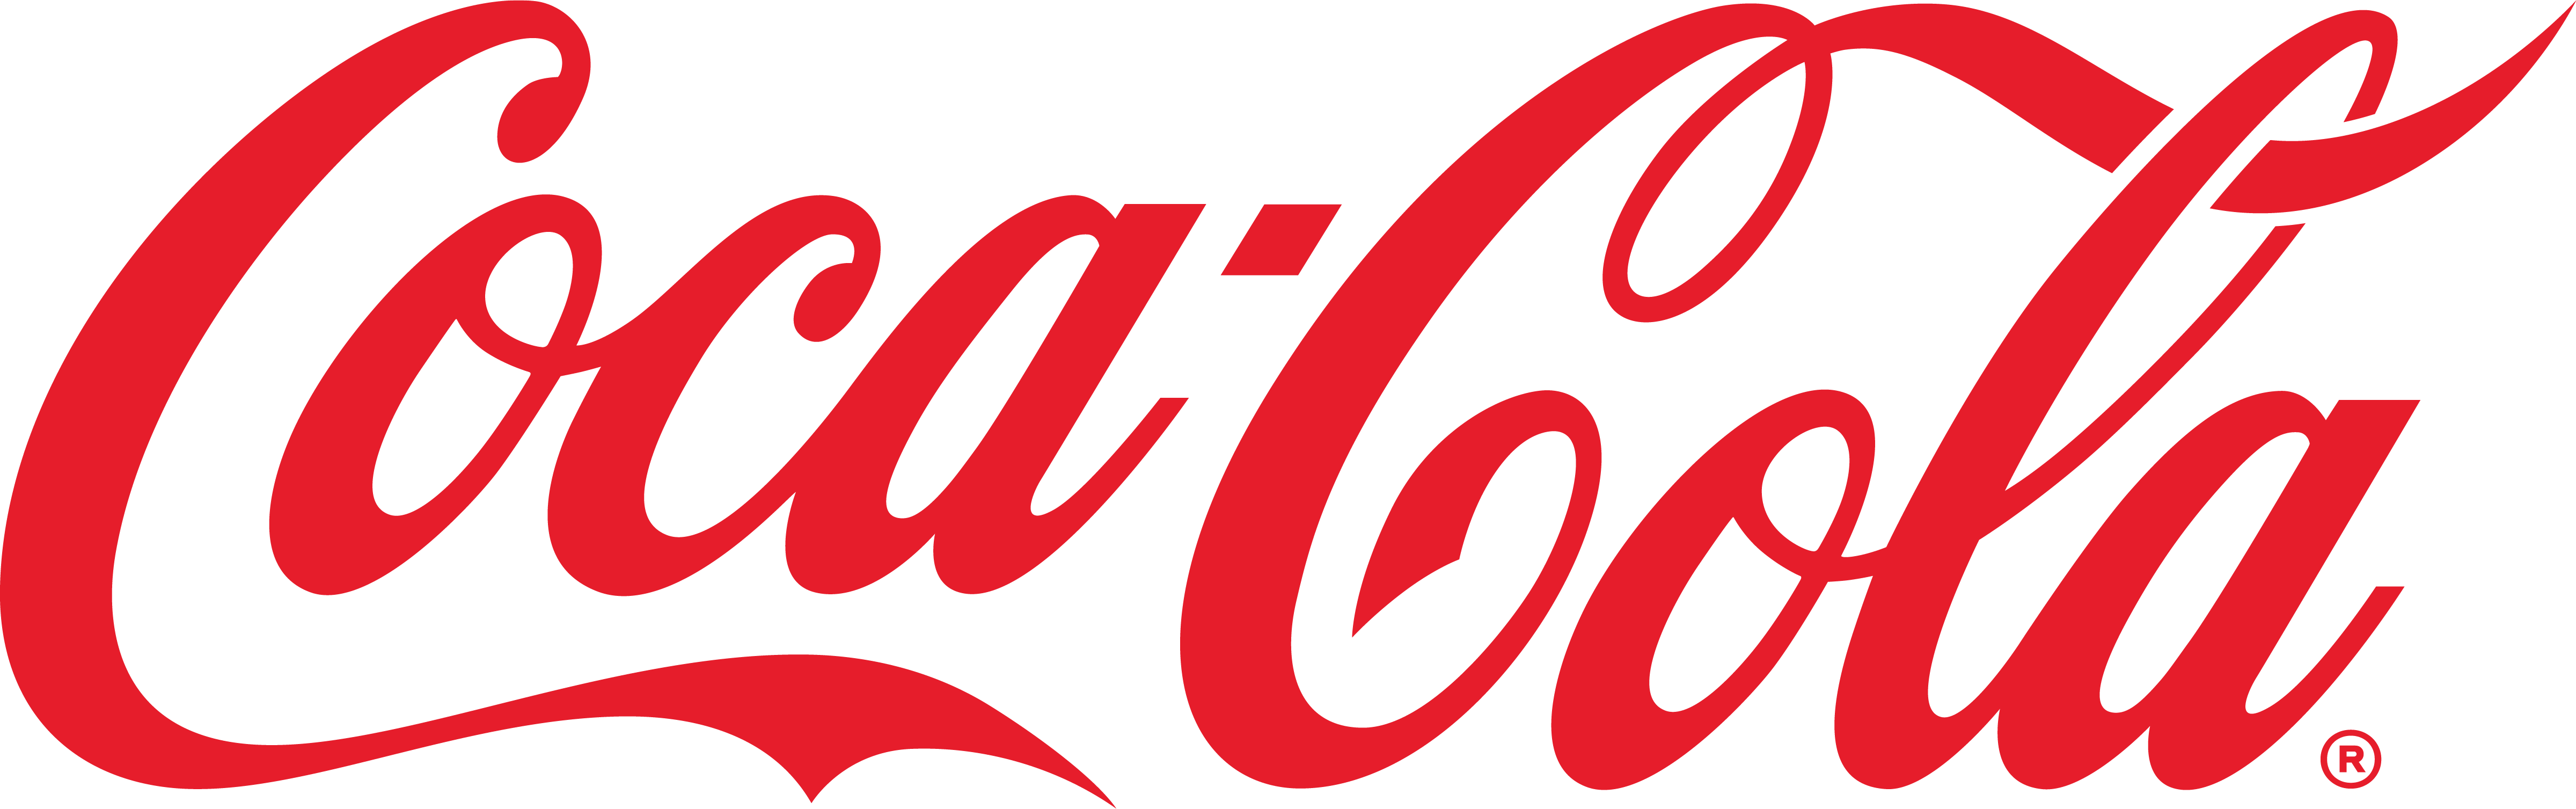 Coca-Cola Australia